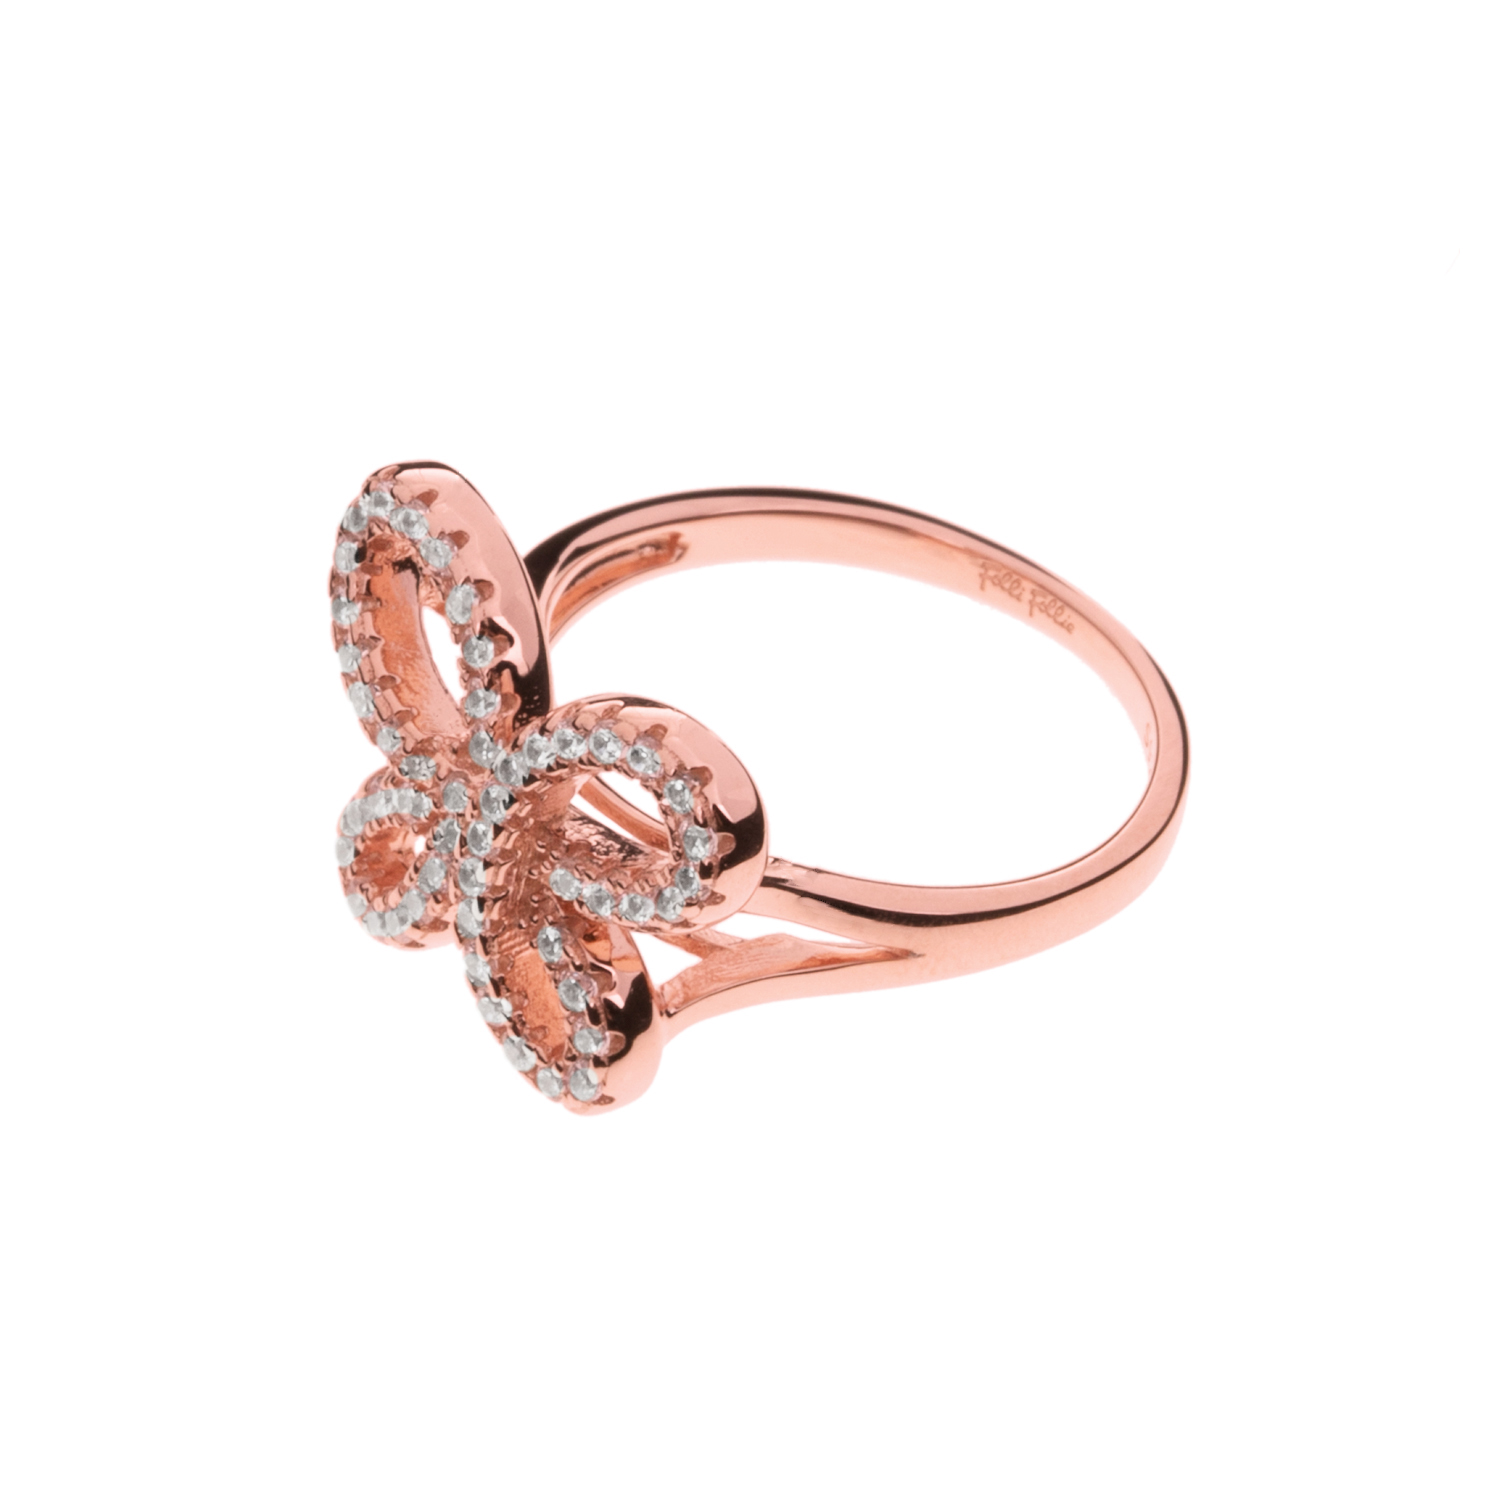 FOLLI FOLLIE - Γυναικείο ασημένιο δαχτυλίδι με πεταλούδα FOLLI FOLLIE ροζ-χρυσό Γυναικεία/Αξεσουάρ/Κοσμήματα/Δαχτυλίδια